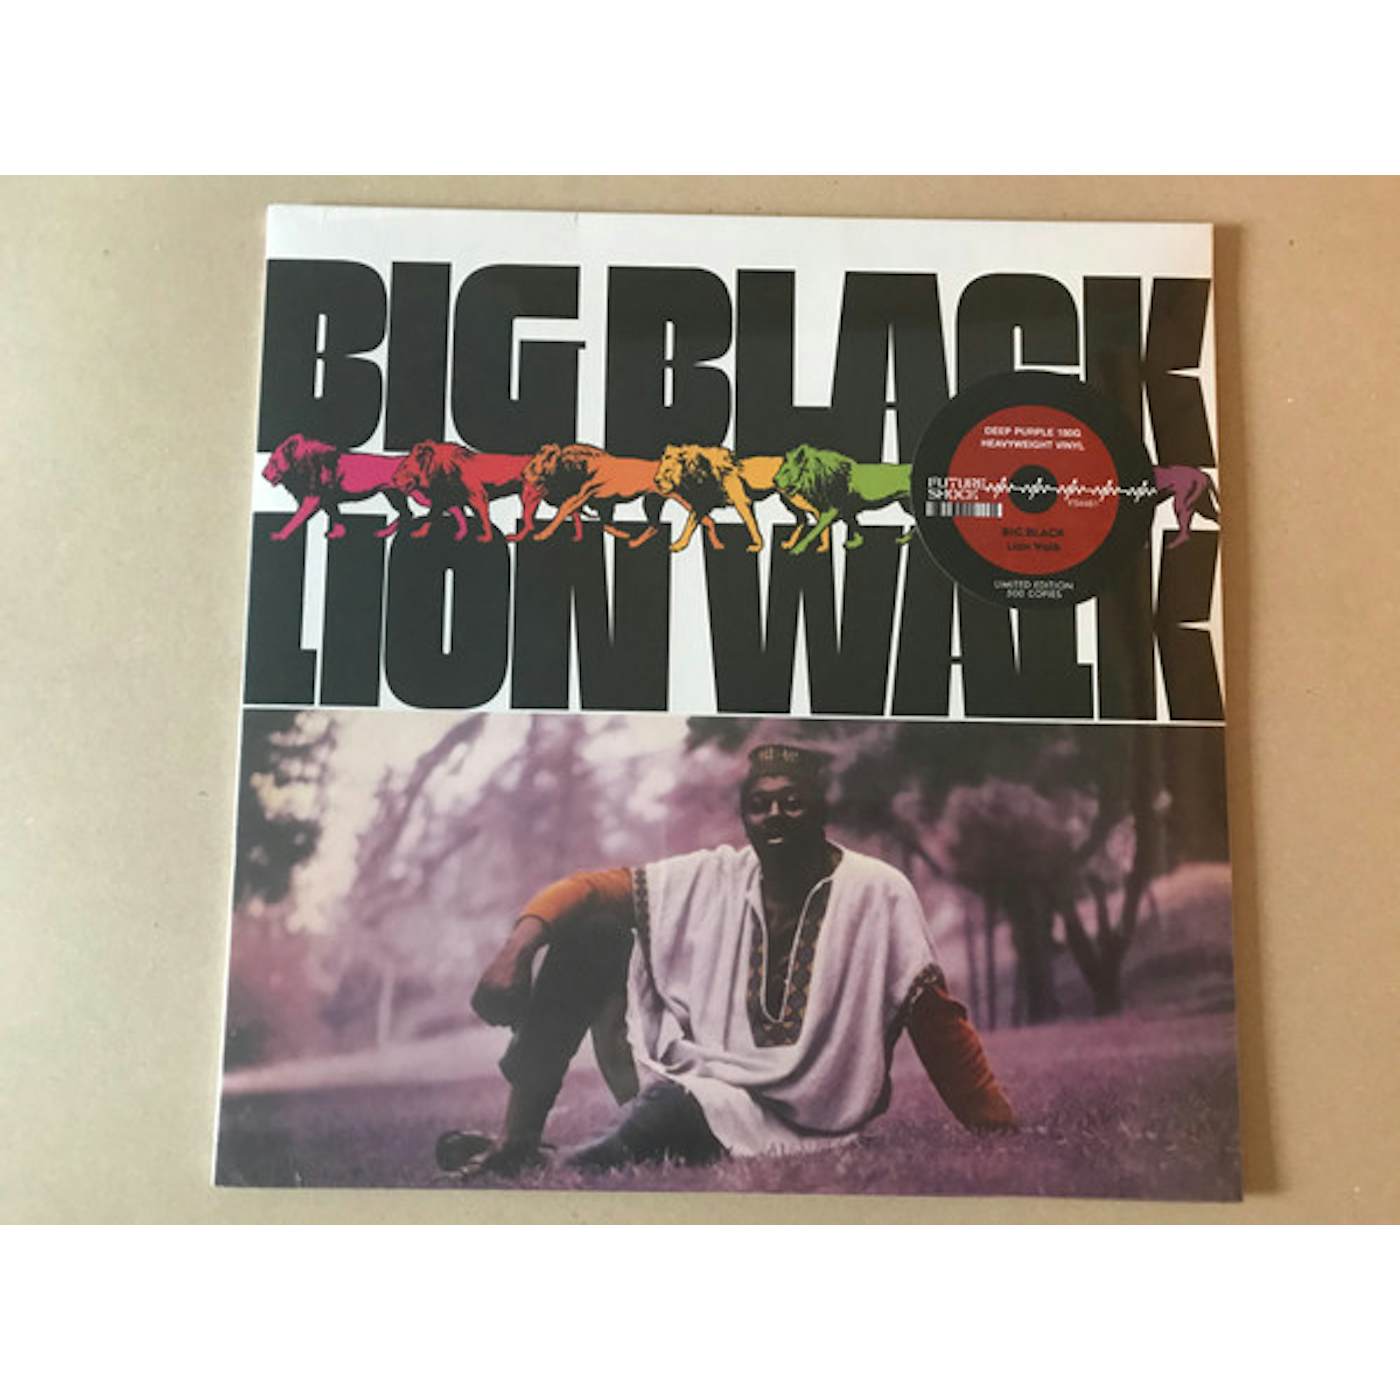 Big Black Lion Walk Vinyl Record